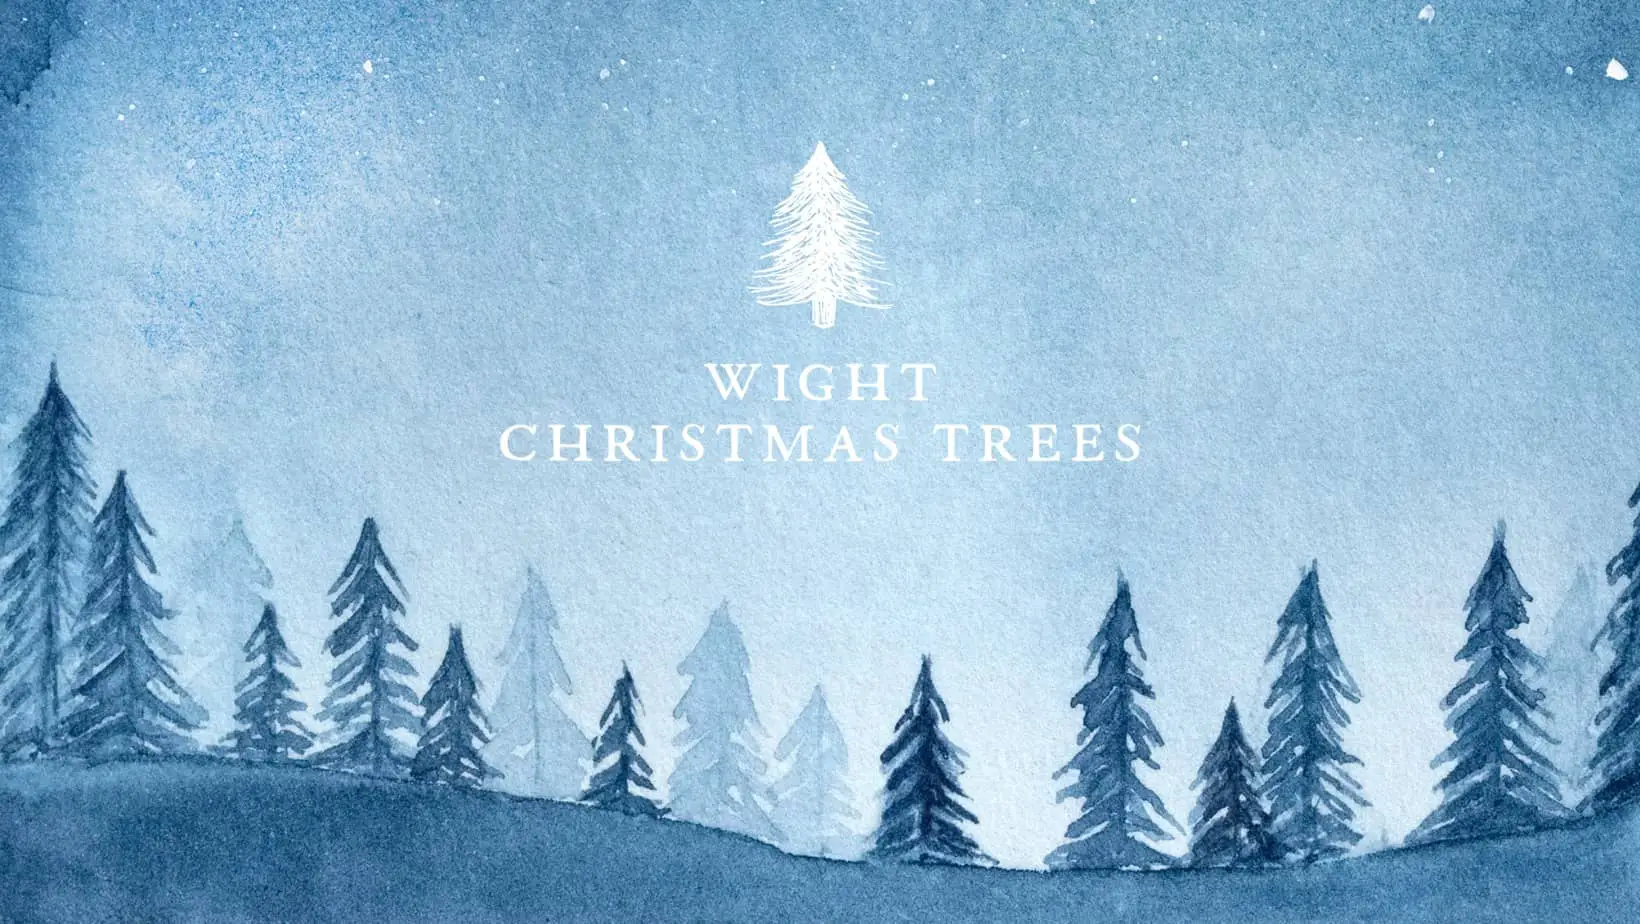 Wight Christmas Trees illustration